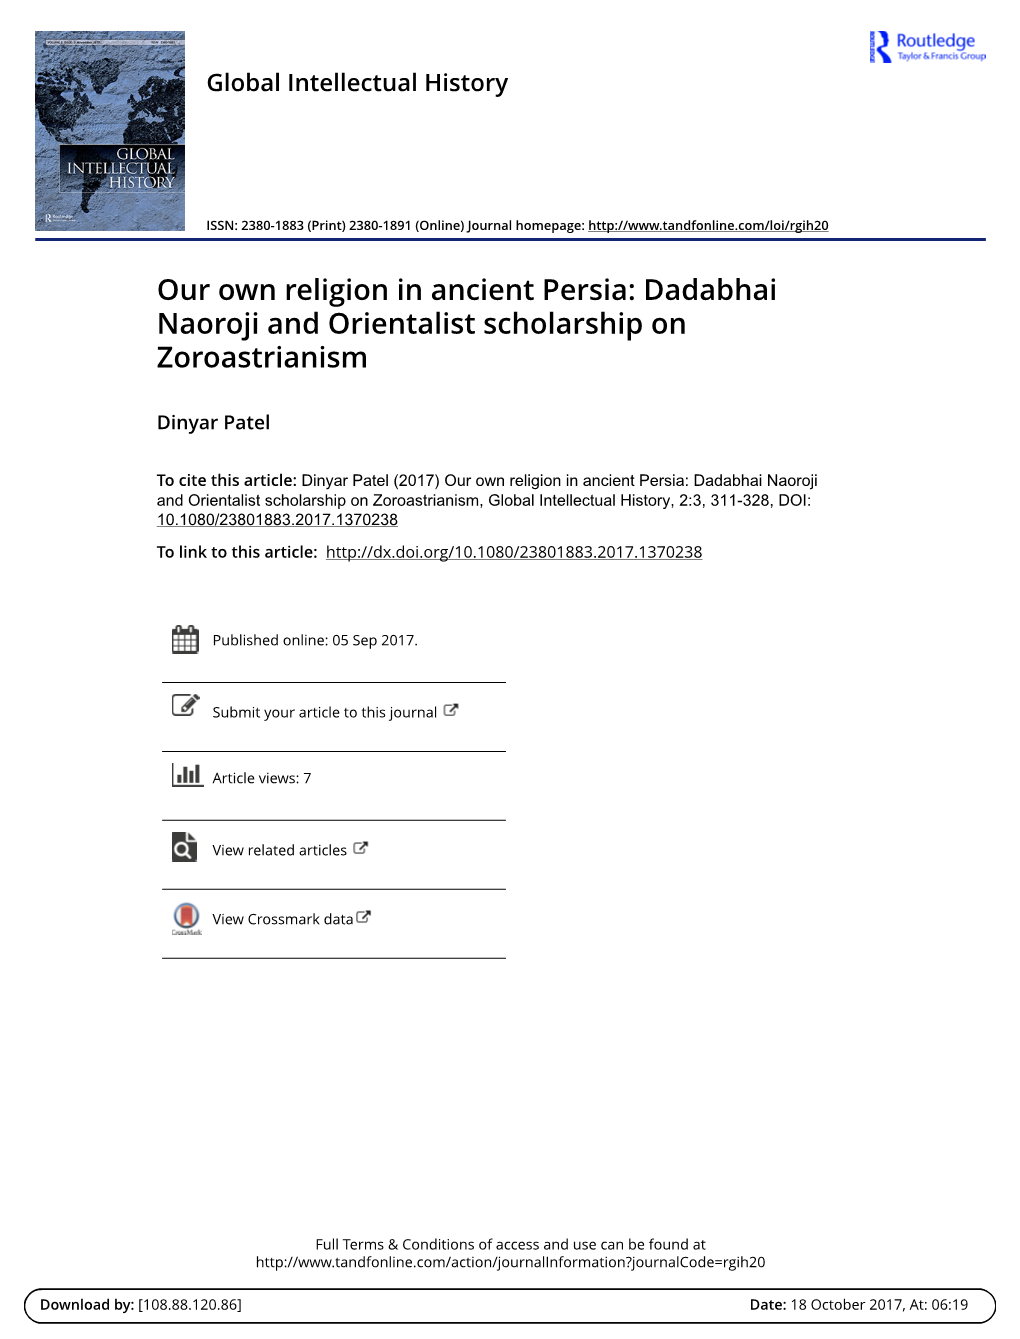 Our Own Religion in Ancient Persia: Dadabhai Naoroji and Orientalist Scholarship on Zoroastrianism